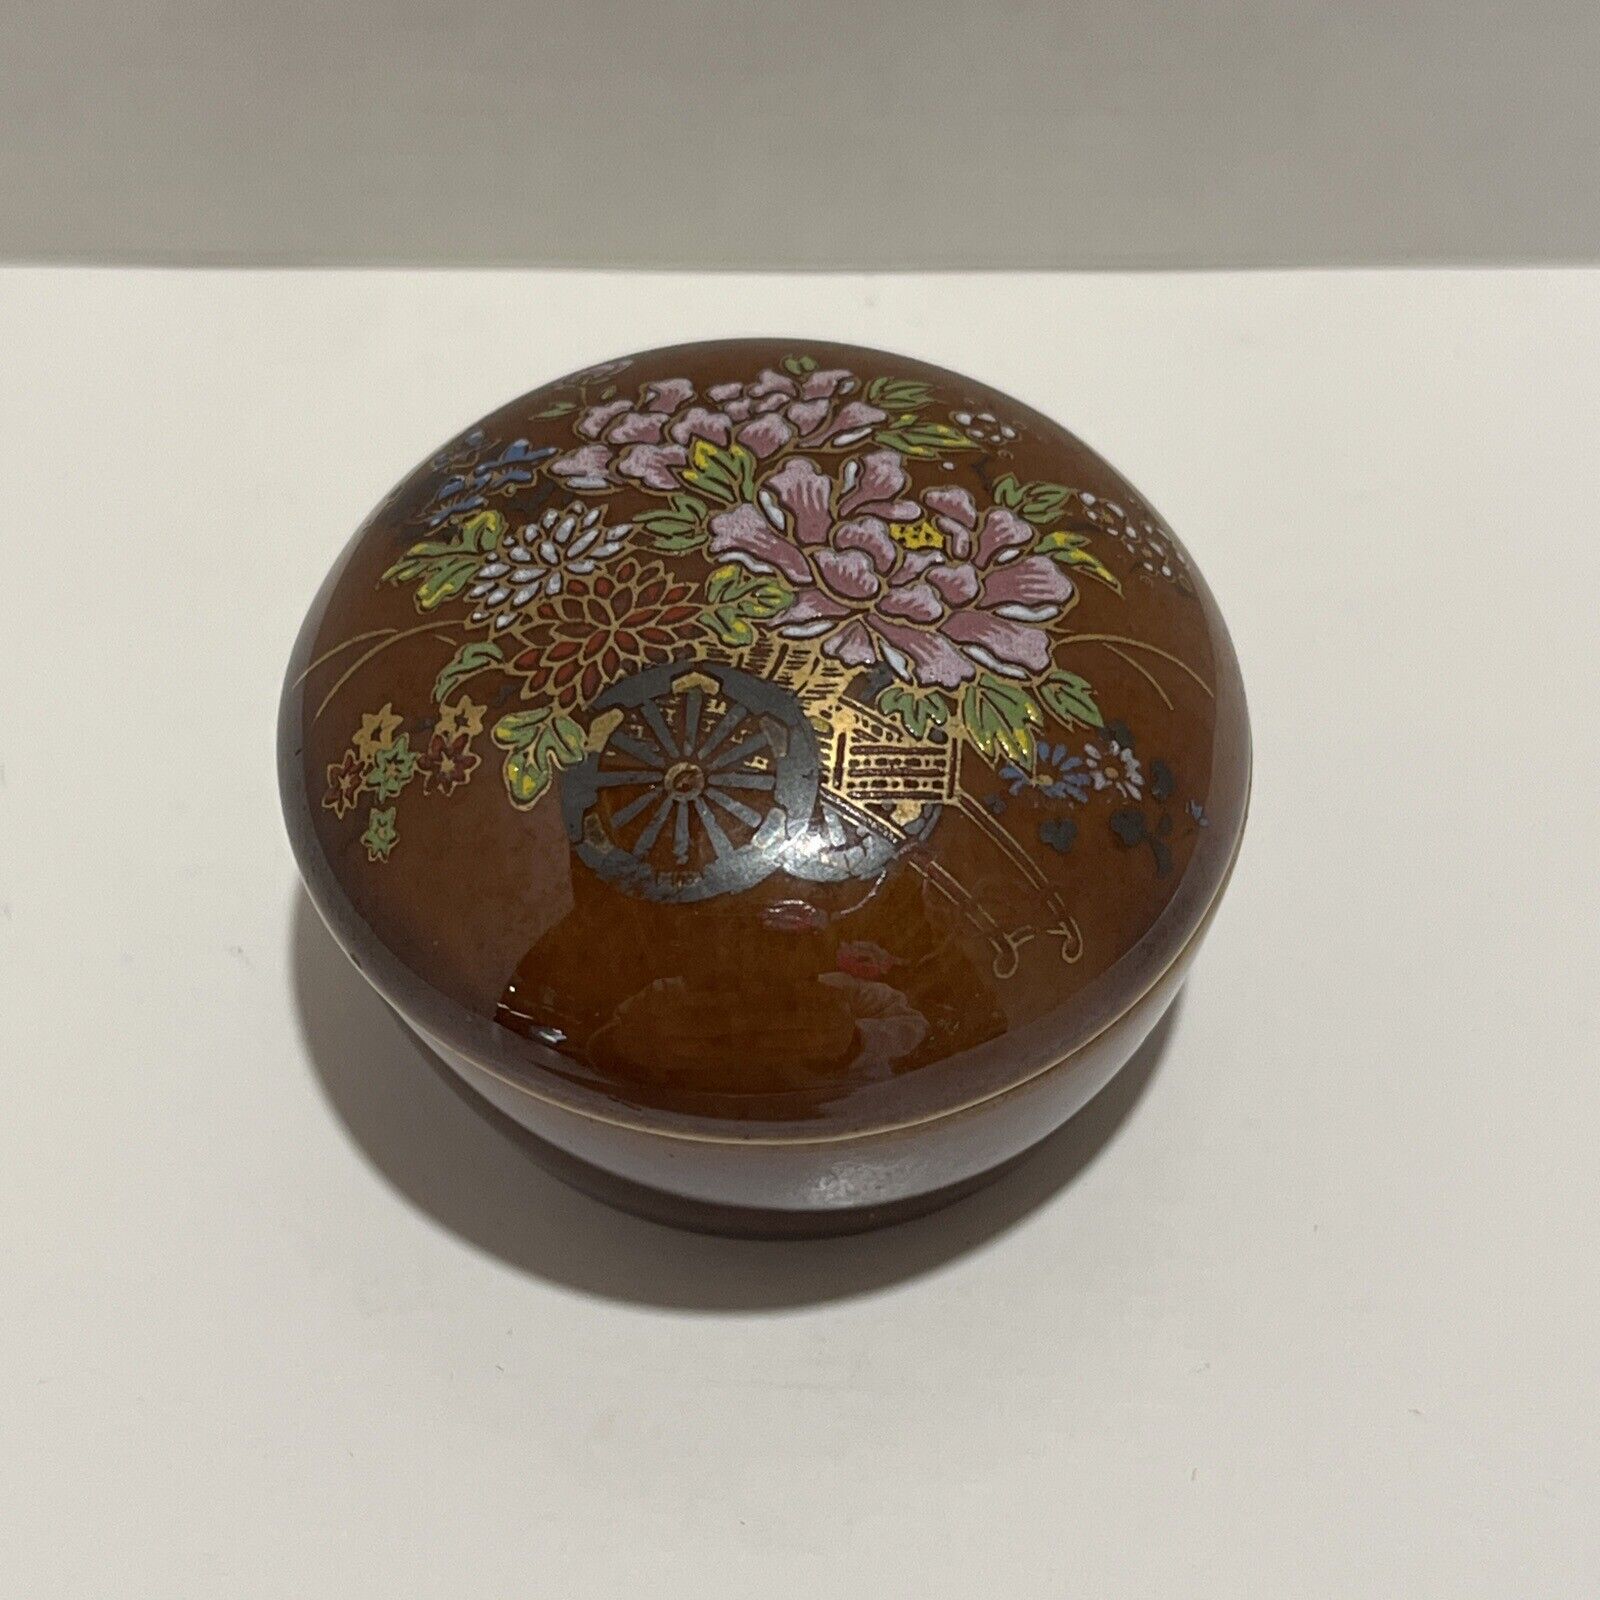 Vintage Japanese Porcelain Trinket Box Round Lid Made in Japan 2” Cart & Flowers